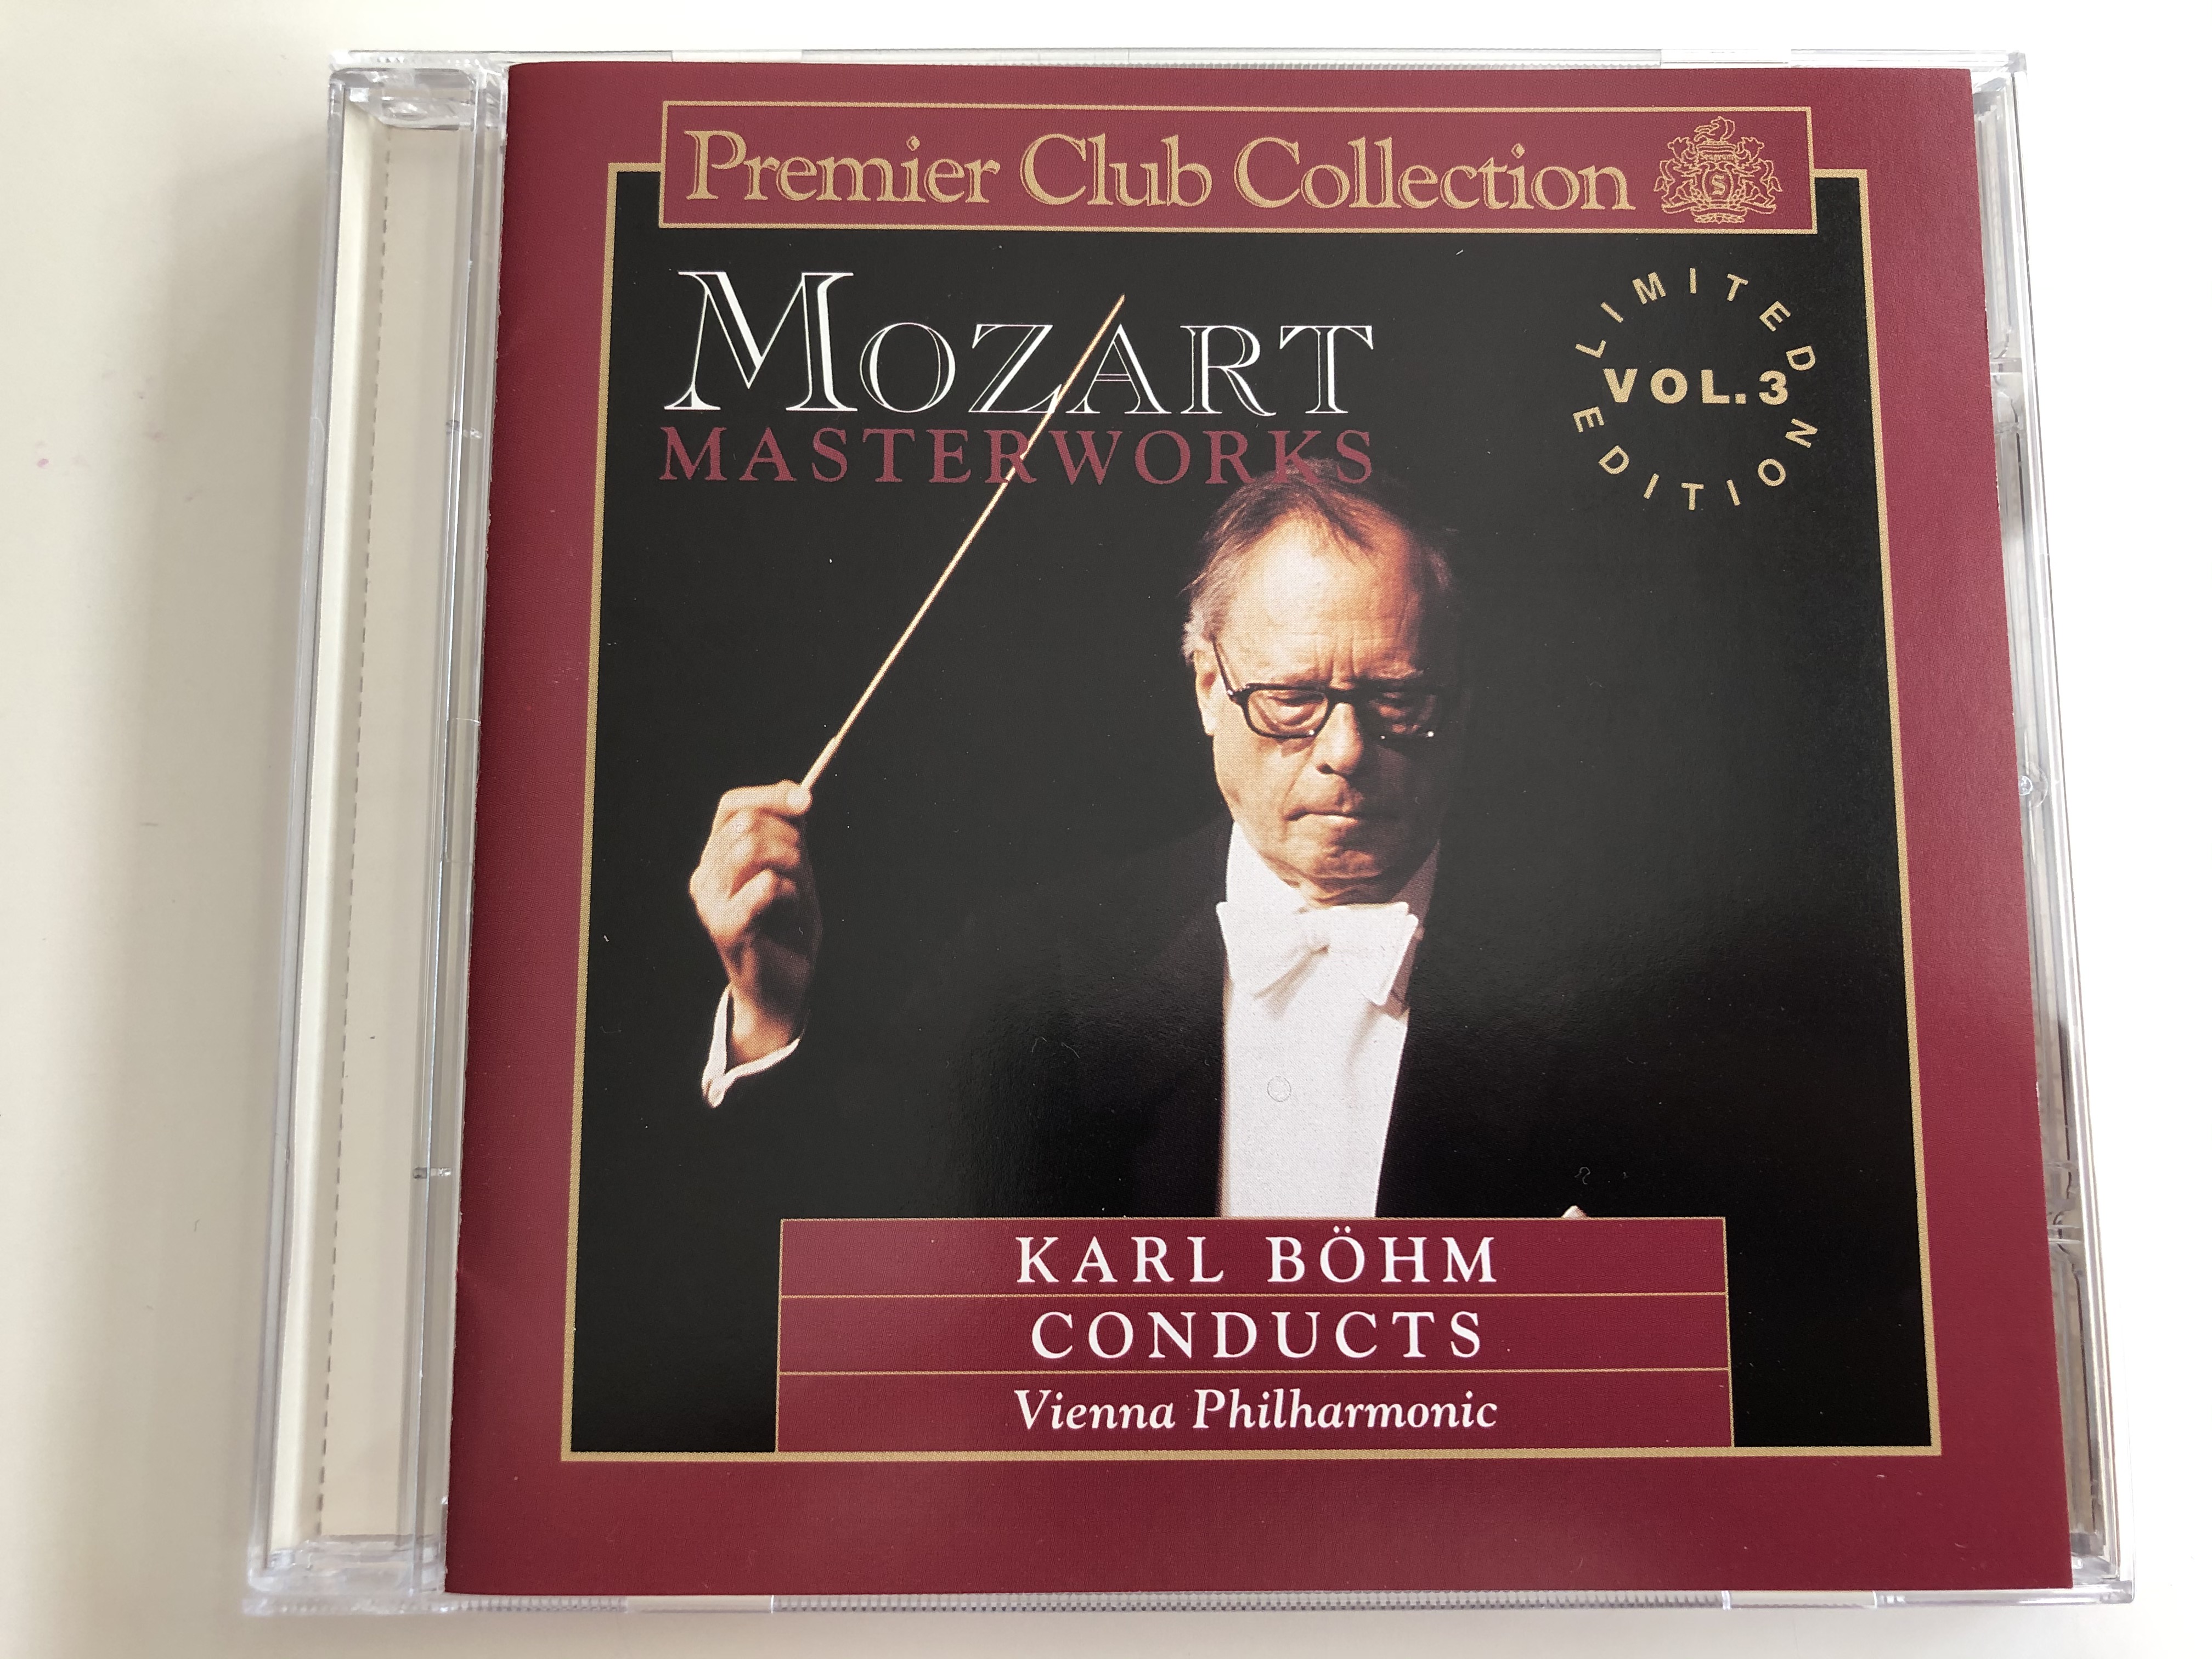 mozart-masterworks-limited-edition-vol.3-conducted-karl-bohm-vienna-philharmonic-premier-club-collection-audio-cd-1992-pcc-003-1-.jpg